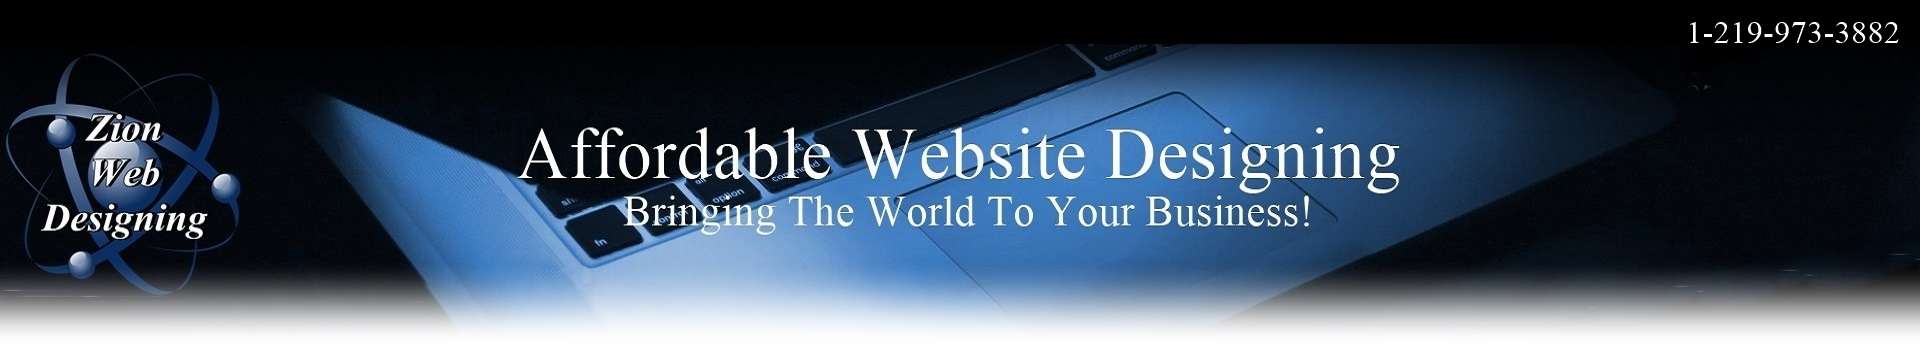 affordable_website_design_wix.com